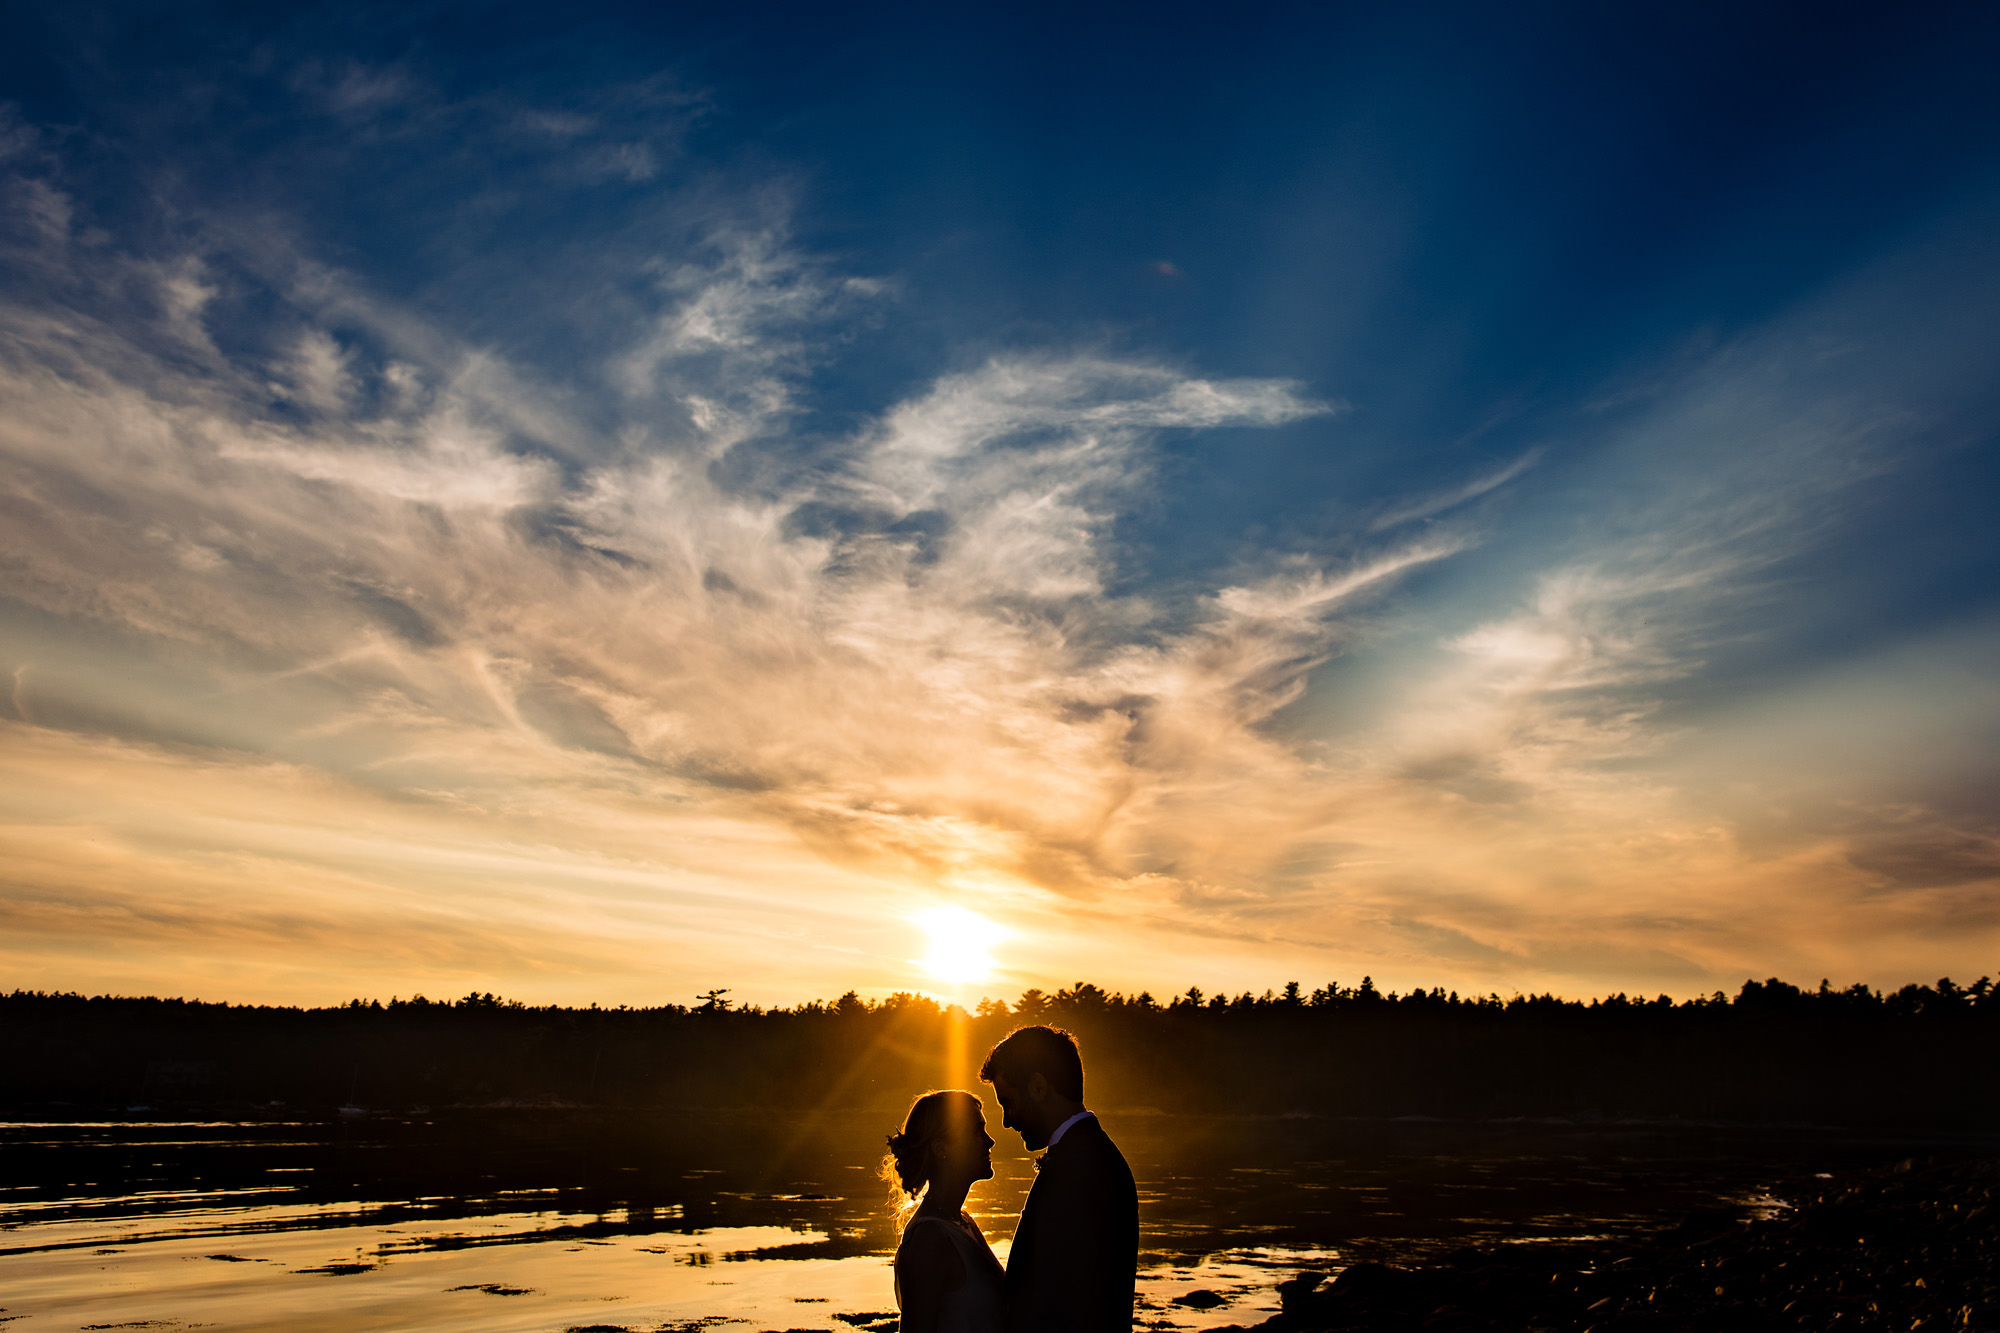 A silhouette sunset wedding portrait.